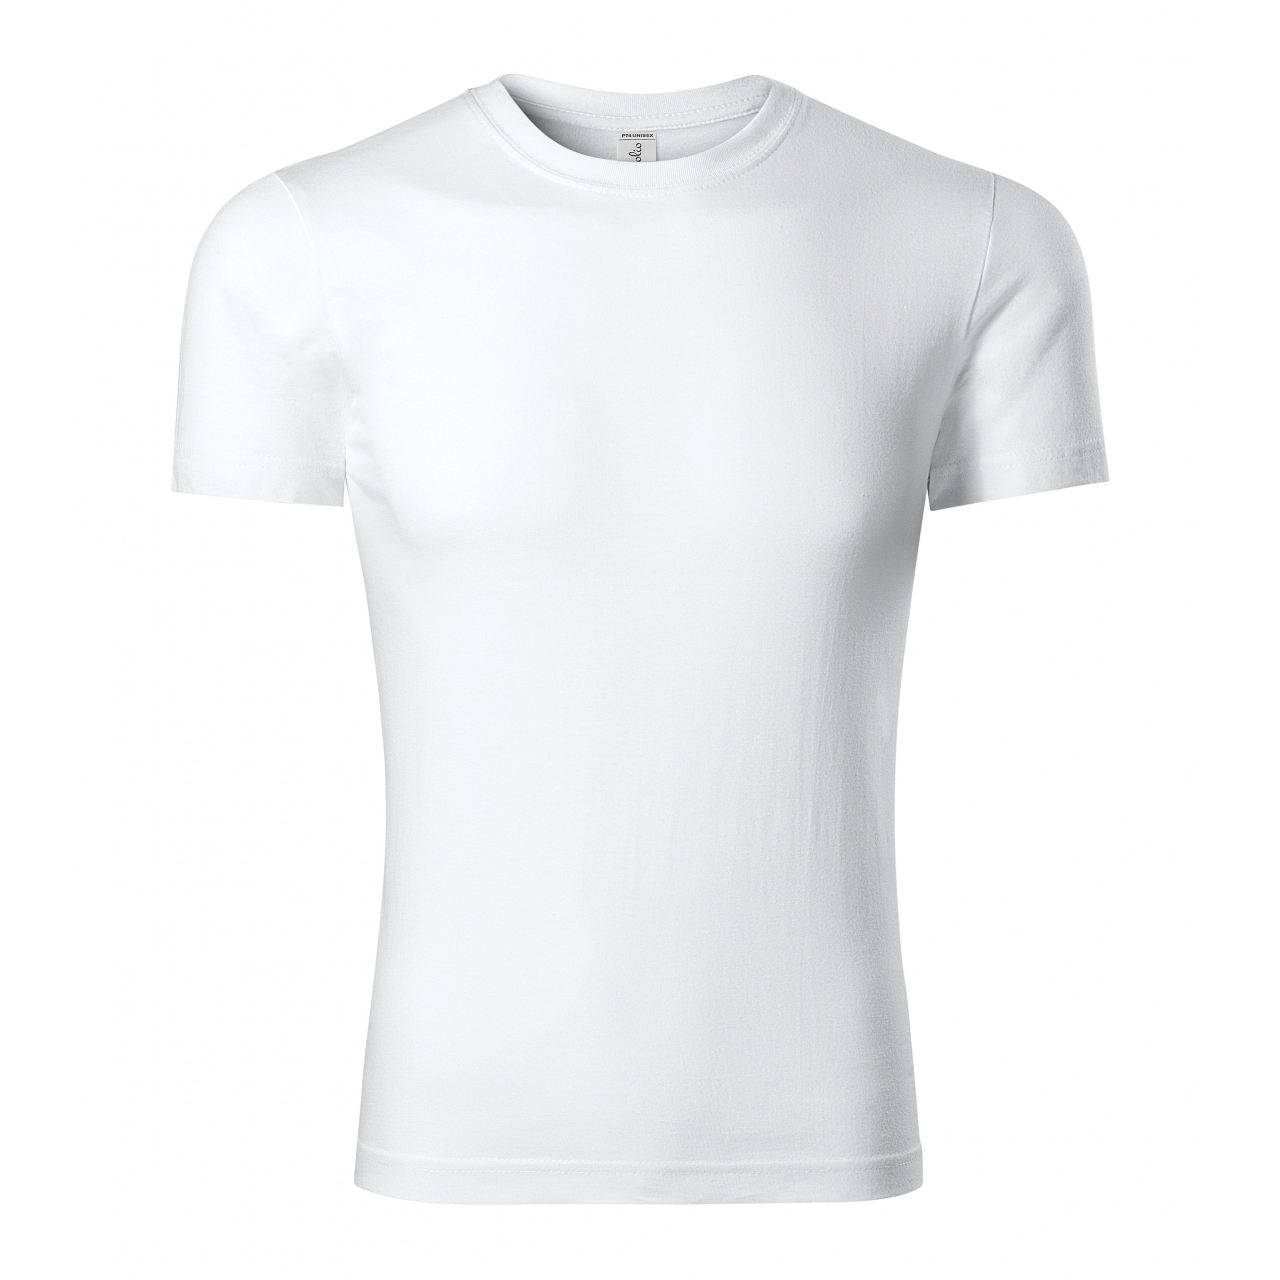 Tričko unisex Piccolio Peak - bílé, XL